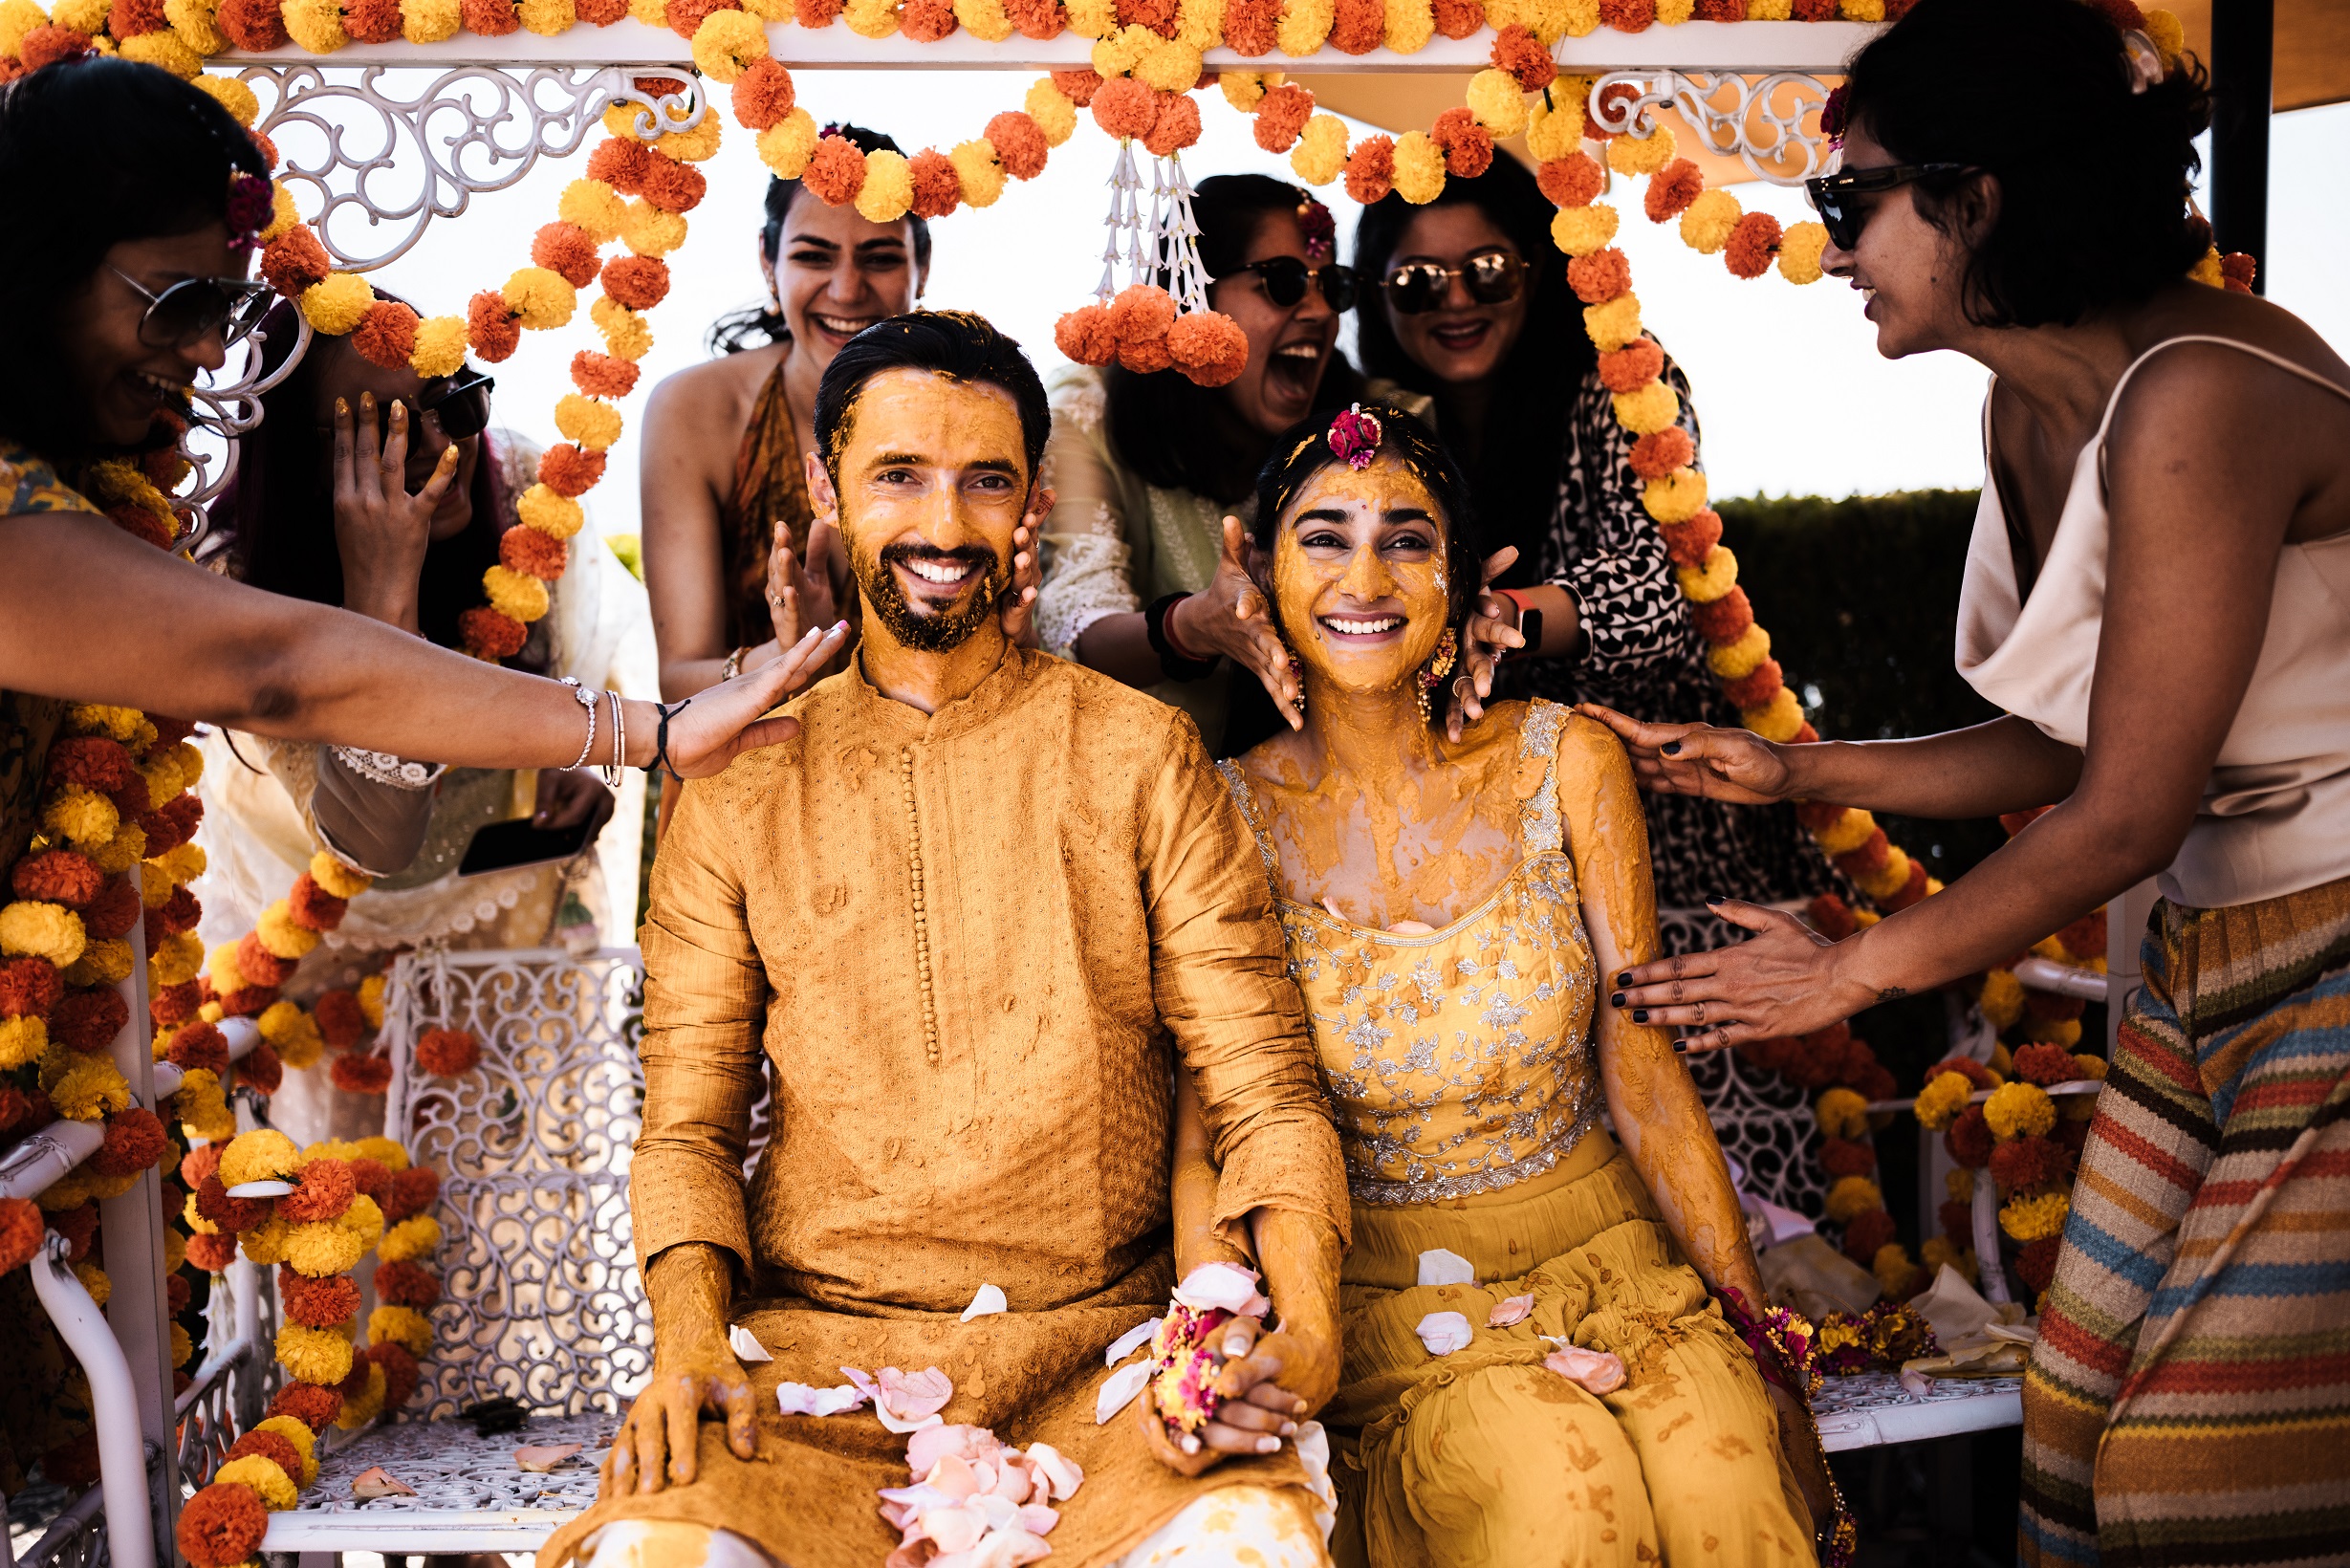 Band, Baaja, Bhangra: Entertainment Ideas for an Enjoyable Wedding